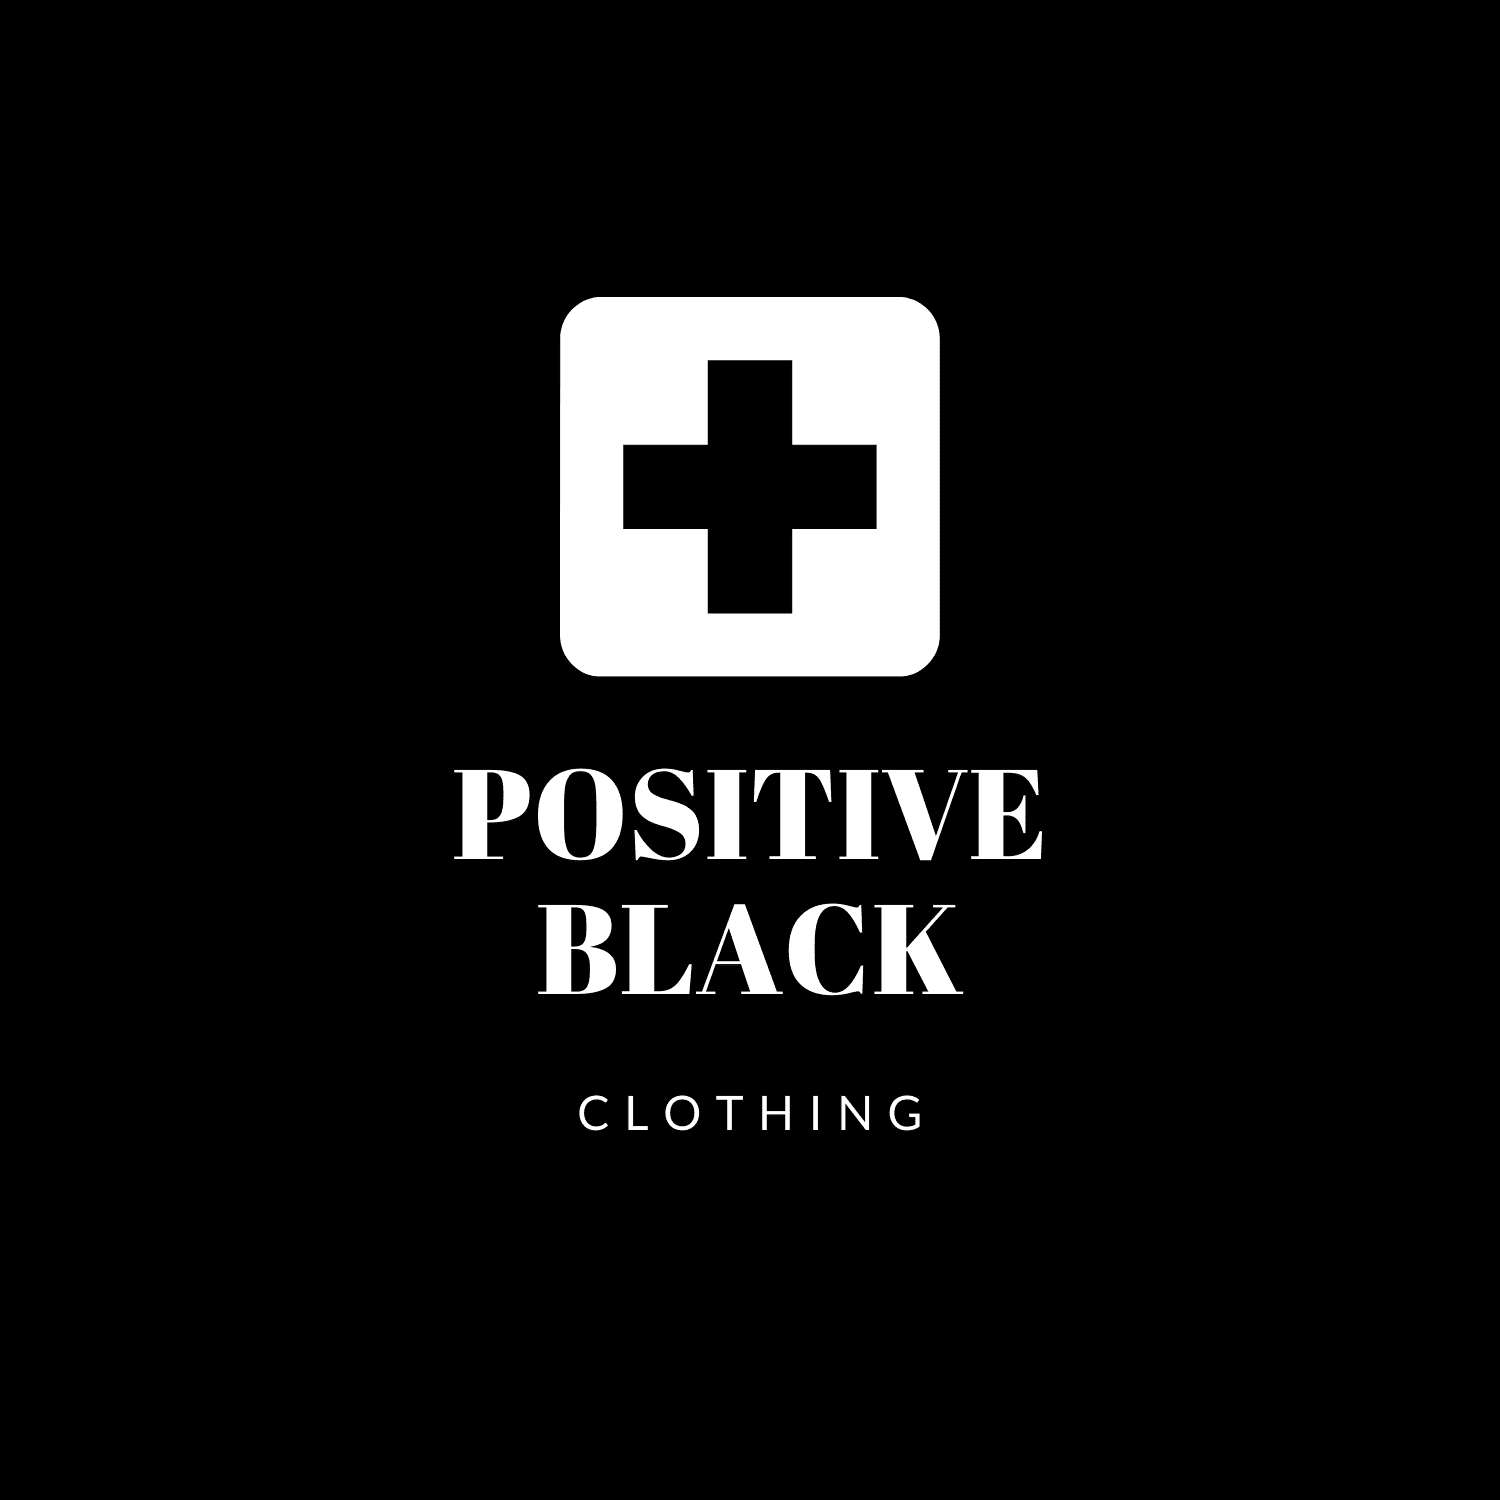 Positive Black Clothing